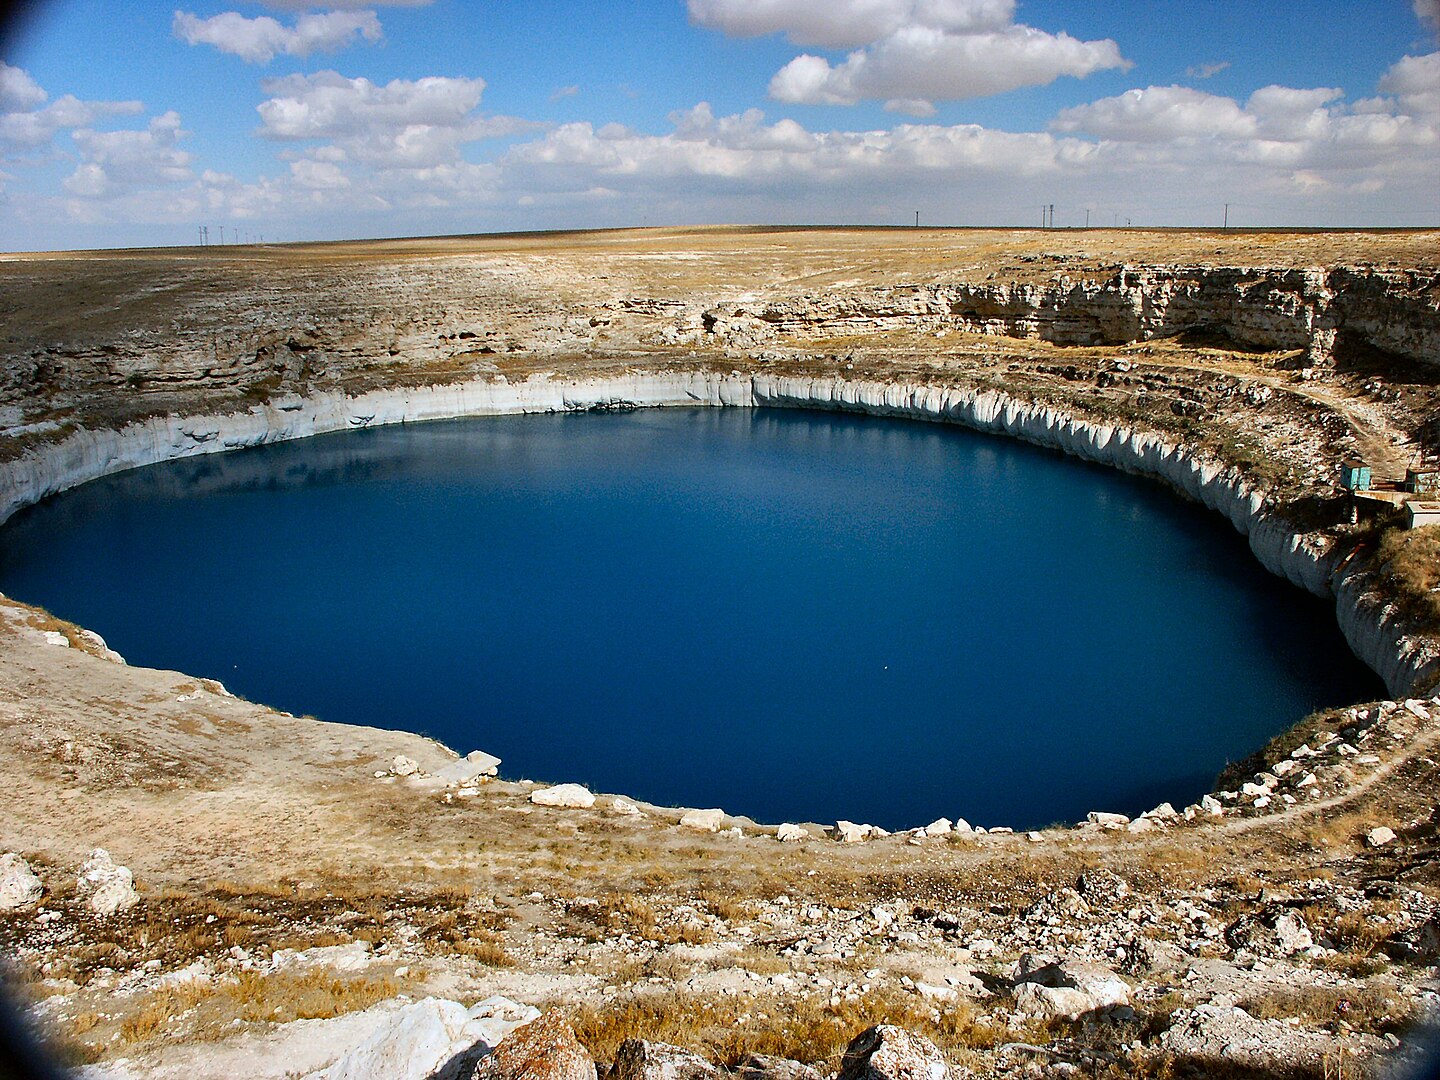 Sinkholes in the Karst Regions